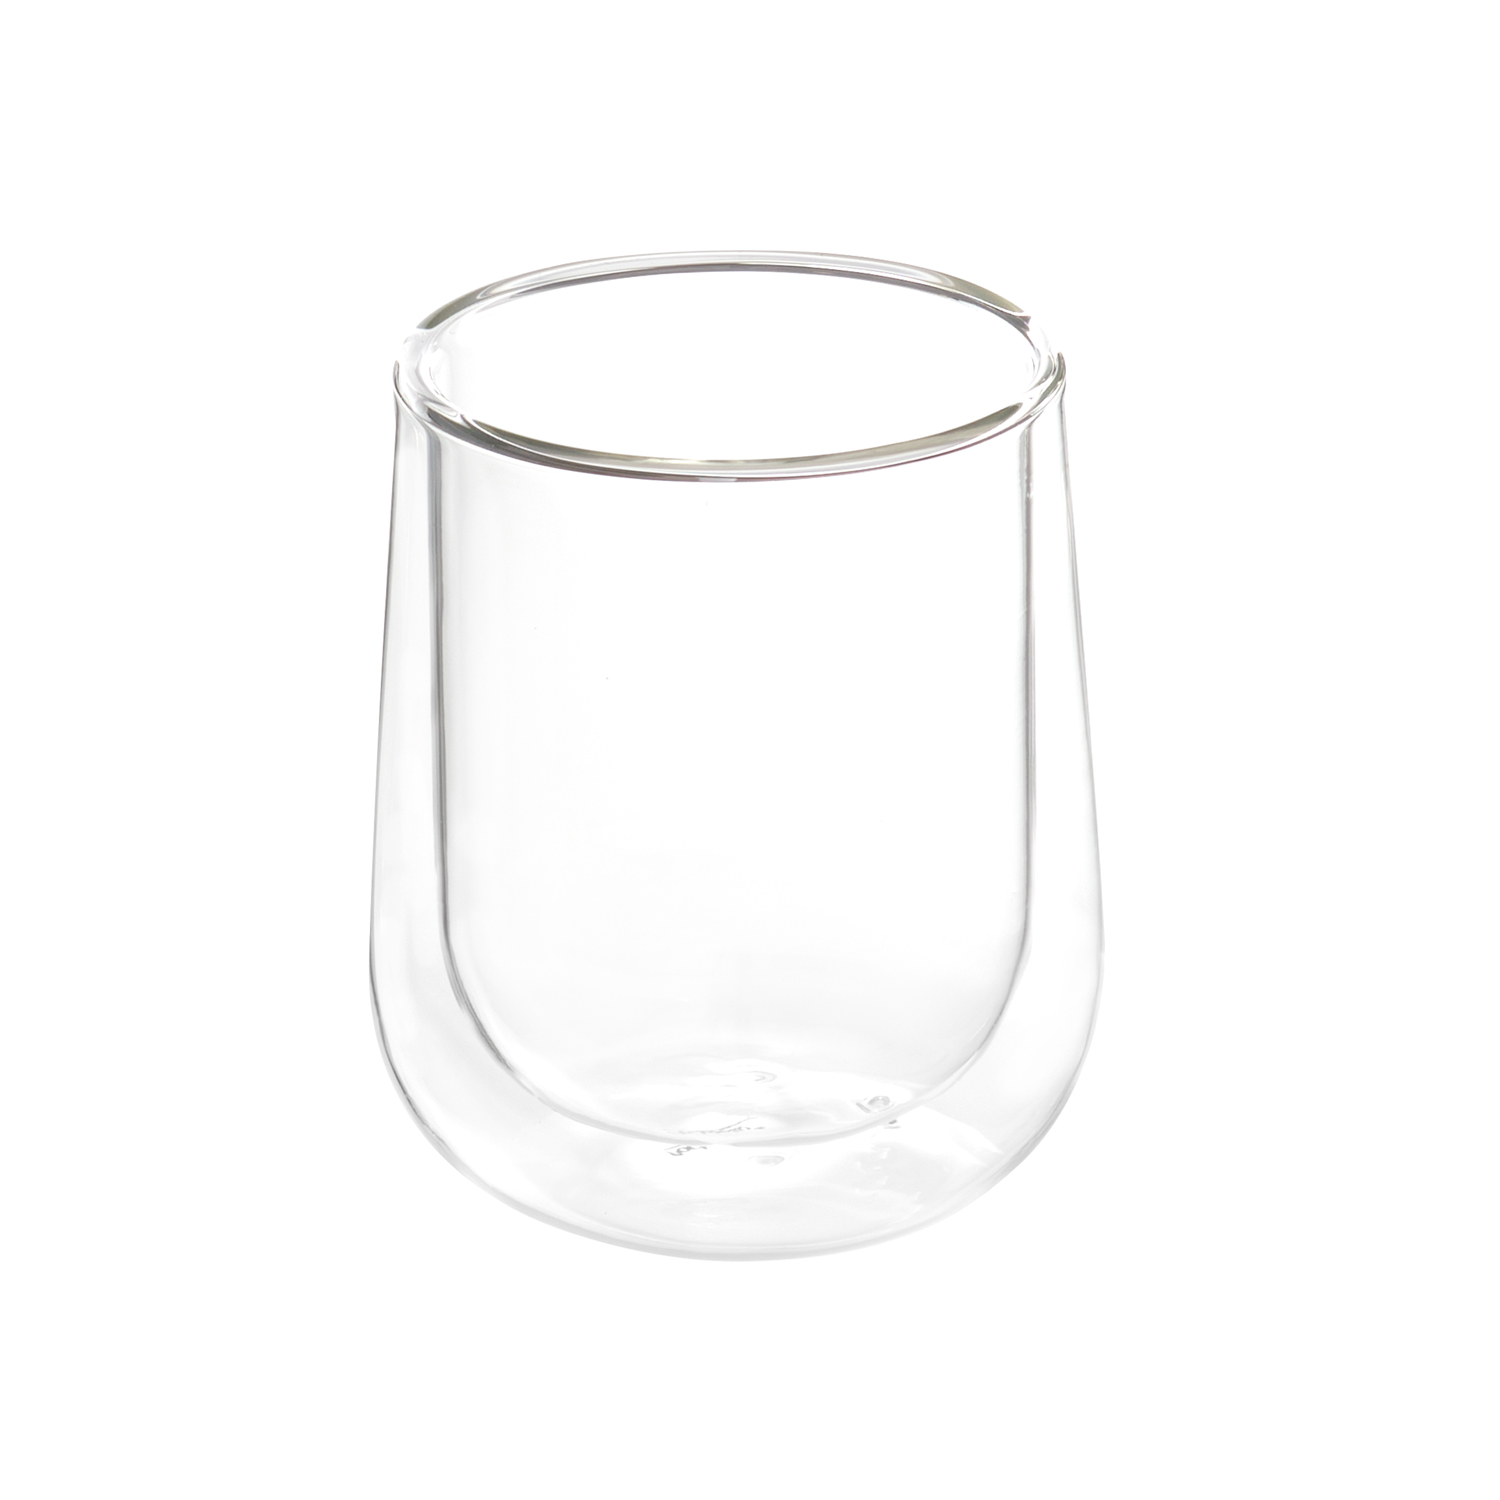 Артикул: A733010.110 — Стакан стеклянный с двойными стенками, Lungo, 300 ml